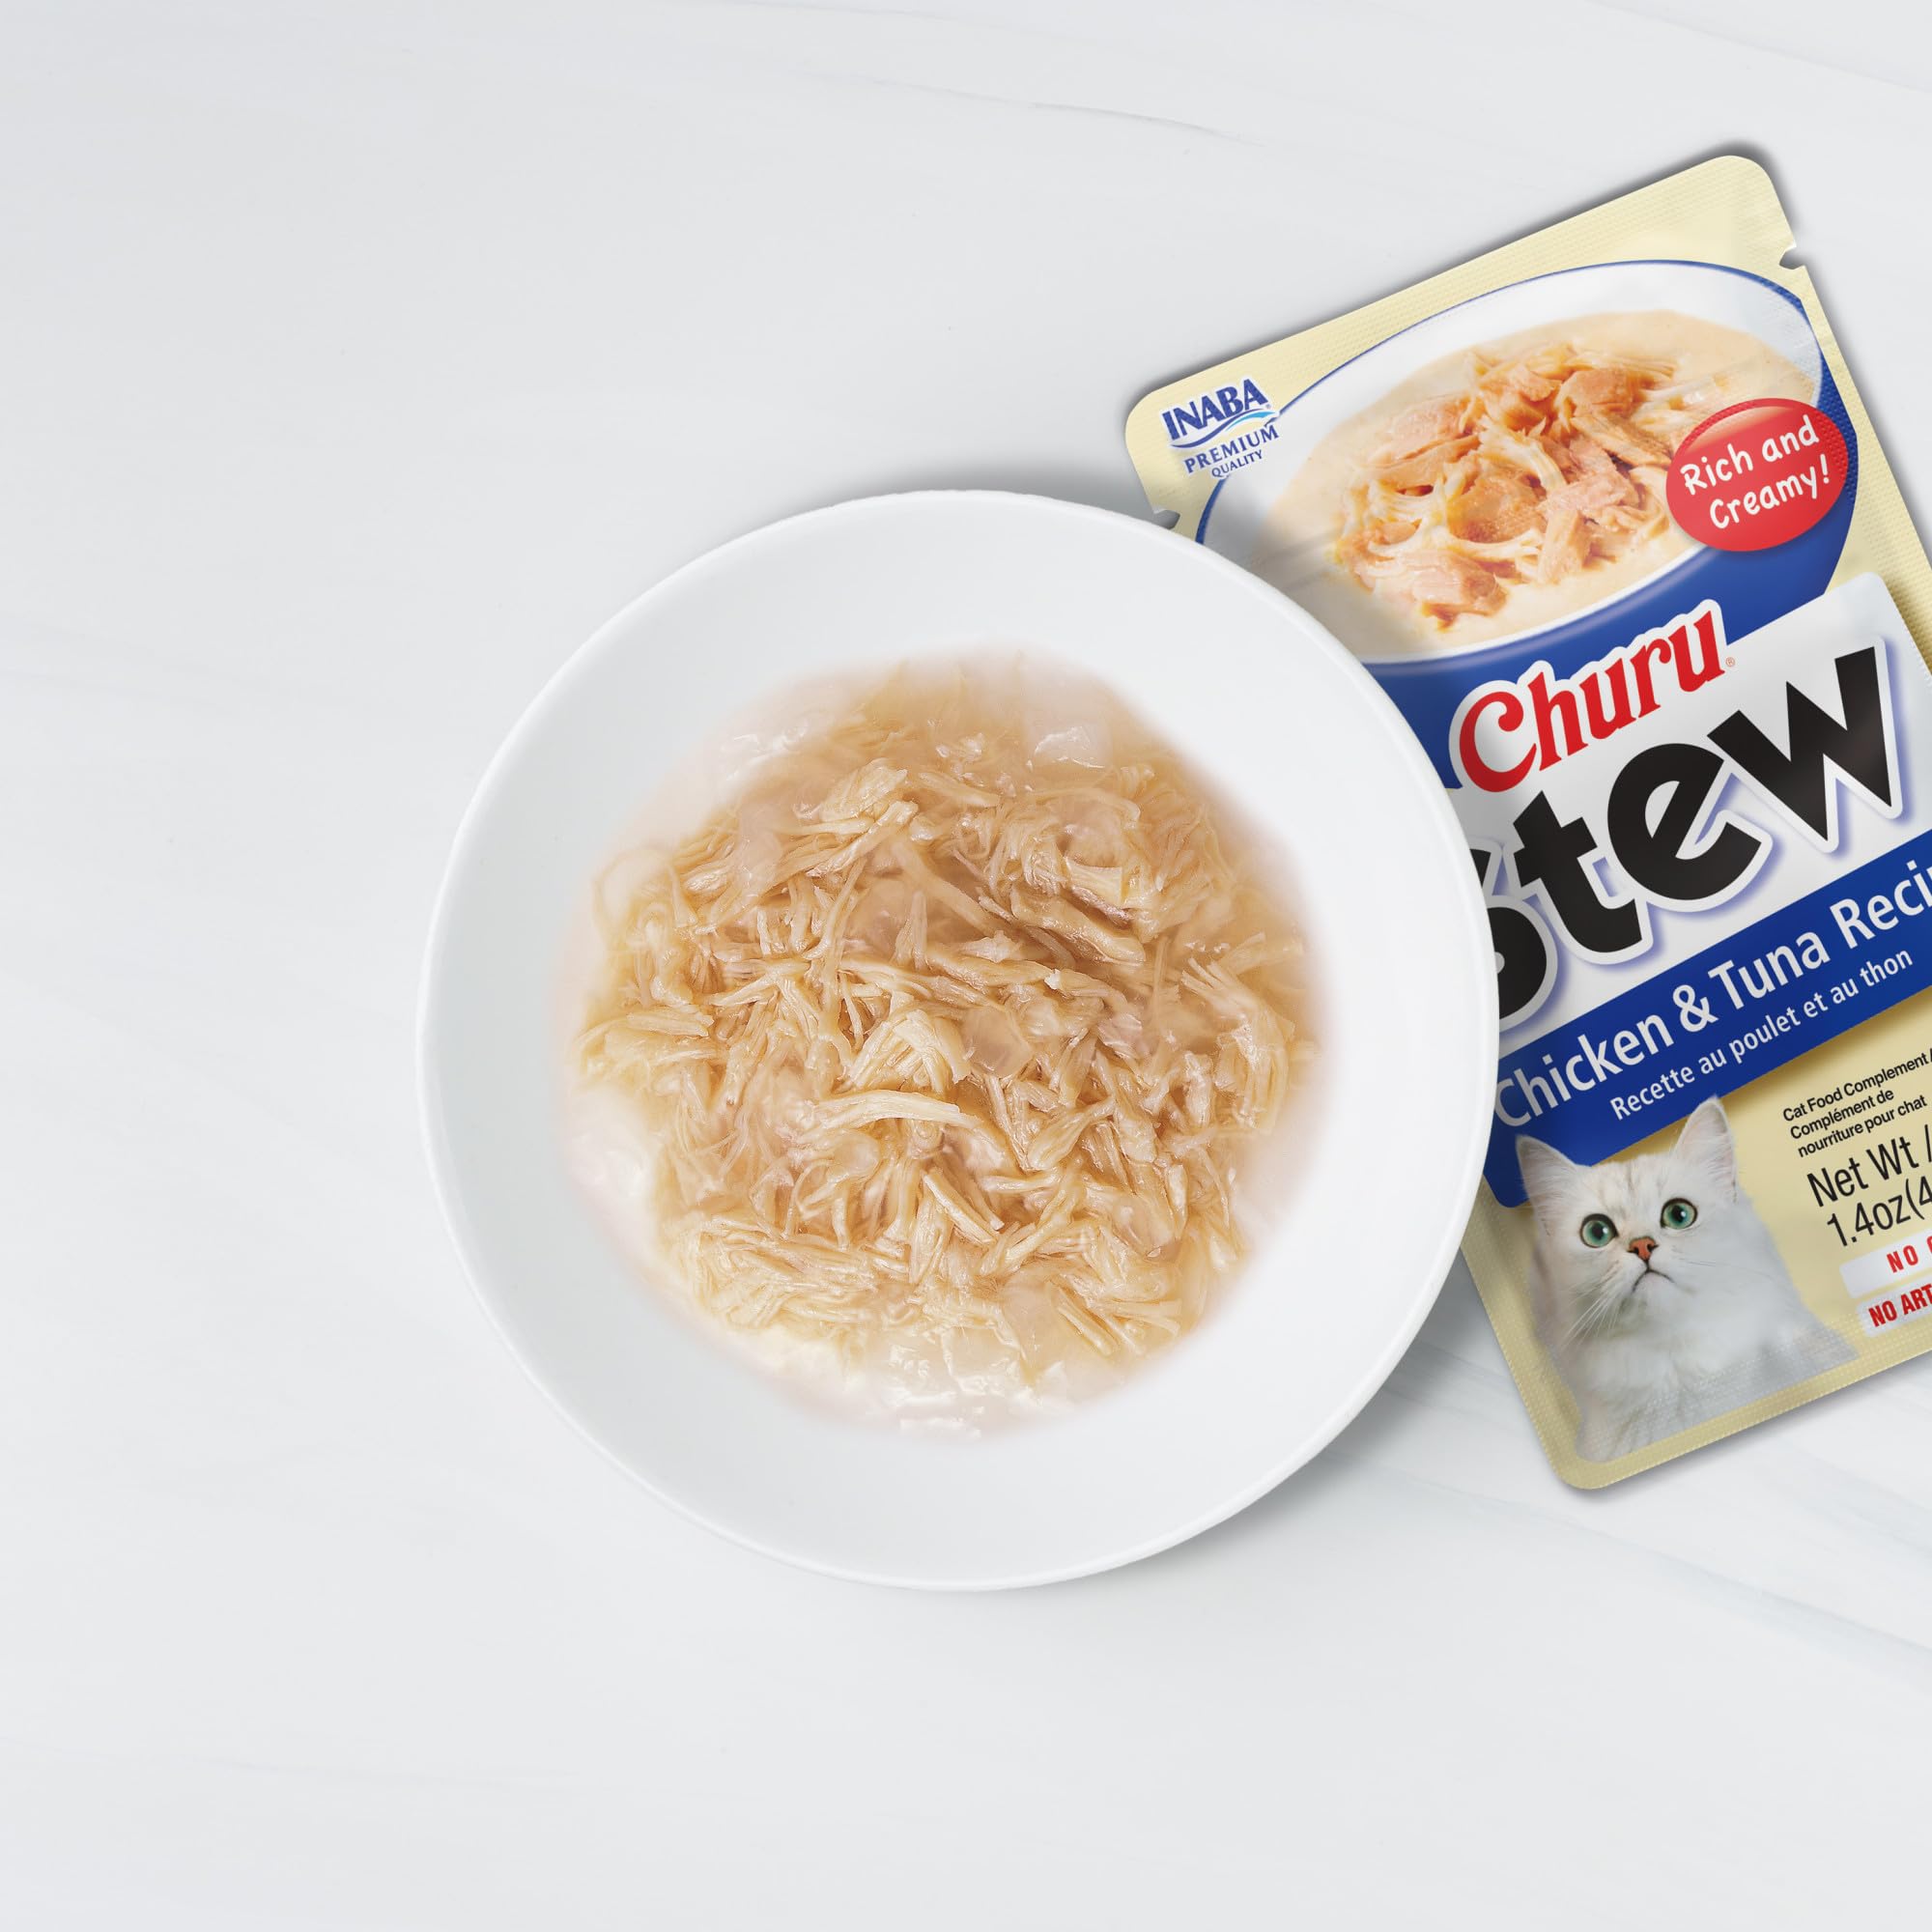 Inaba Churu Chicken Stew Rich and Creamy Wet Cat Food Trays - 1.4 Oz - Case of 6  